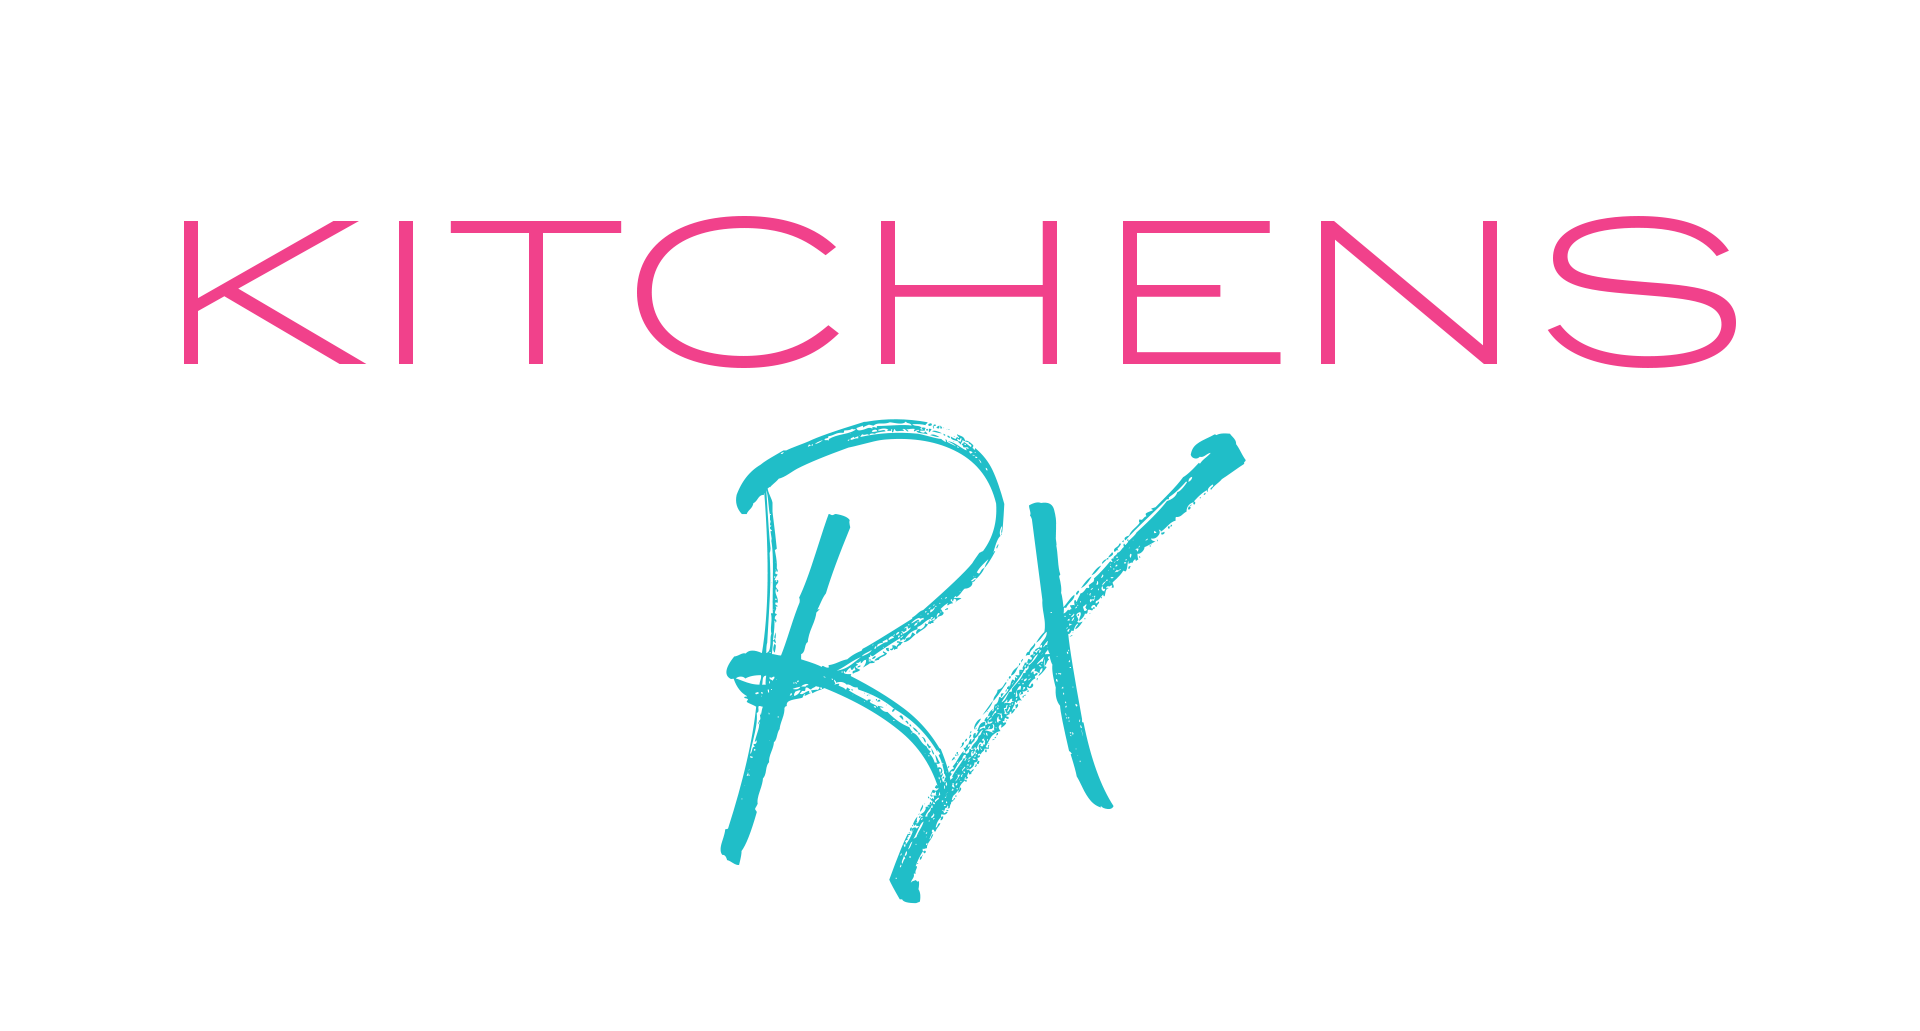 Kitchens Rx